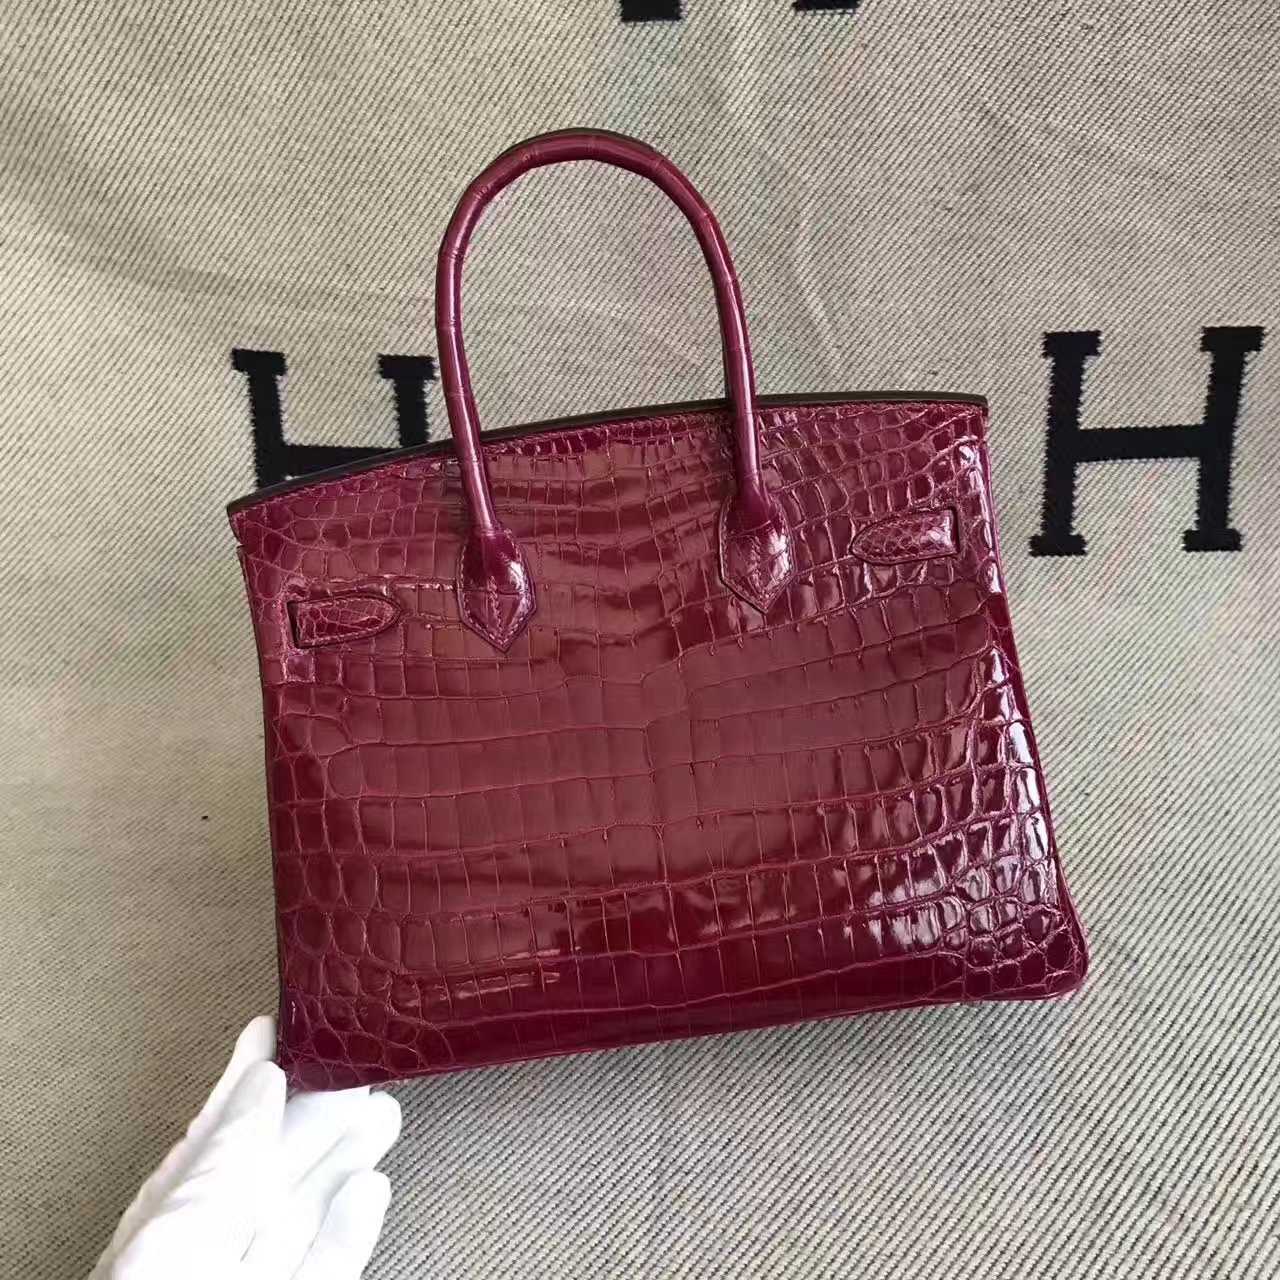 Discount Hermes N5 Gallon Purple Crocodile Shiny Leather Birkin Bag 30cm